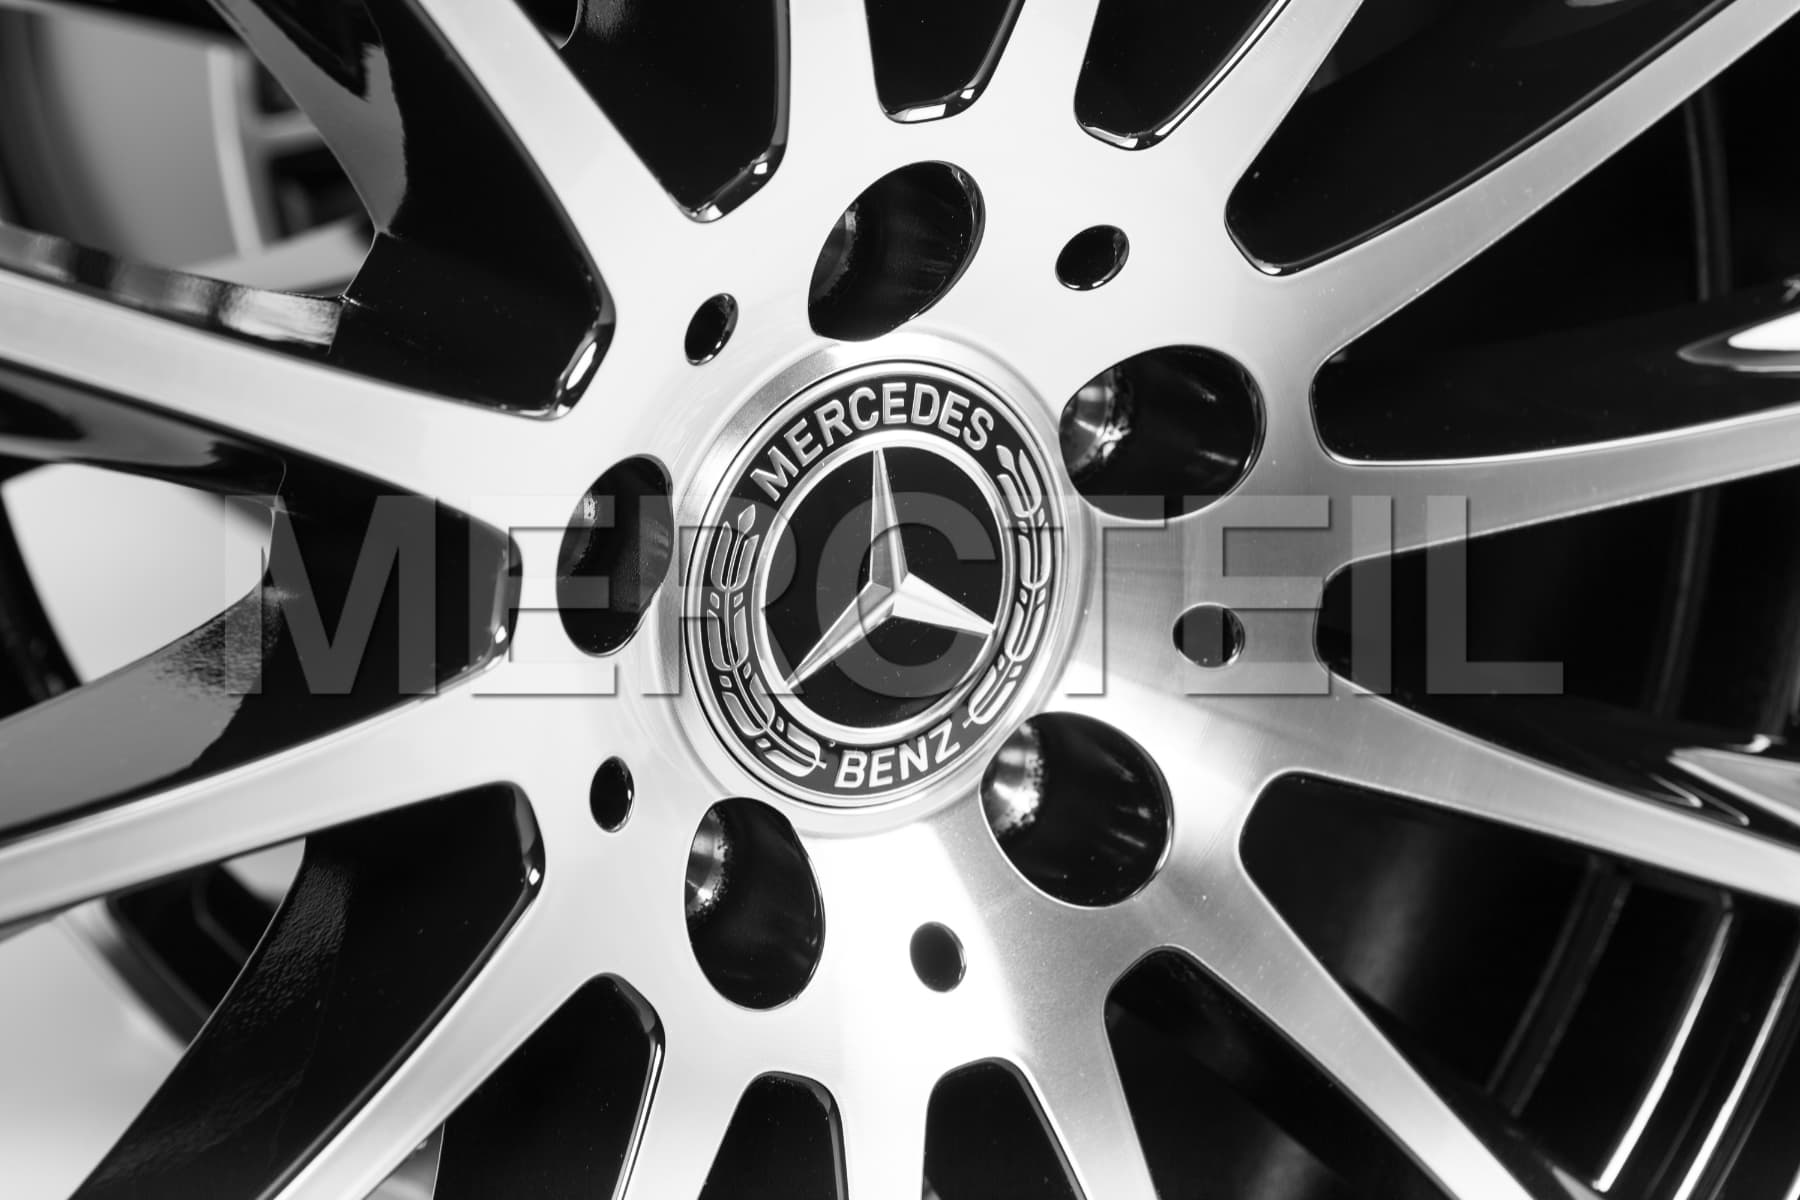 Mercedes CLS AMG Wheels 20 Inch Genuine Mercedes Benz (part number: A25740120007X23)